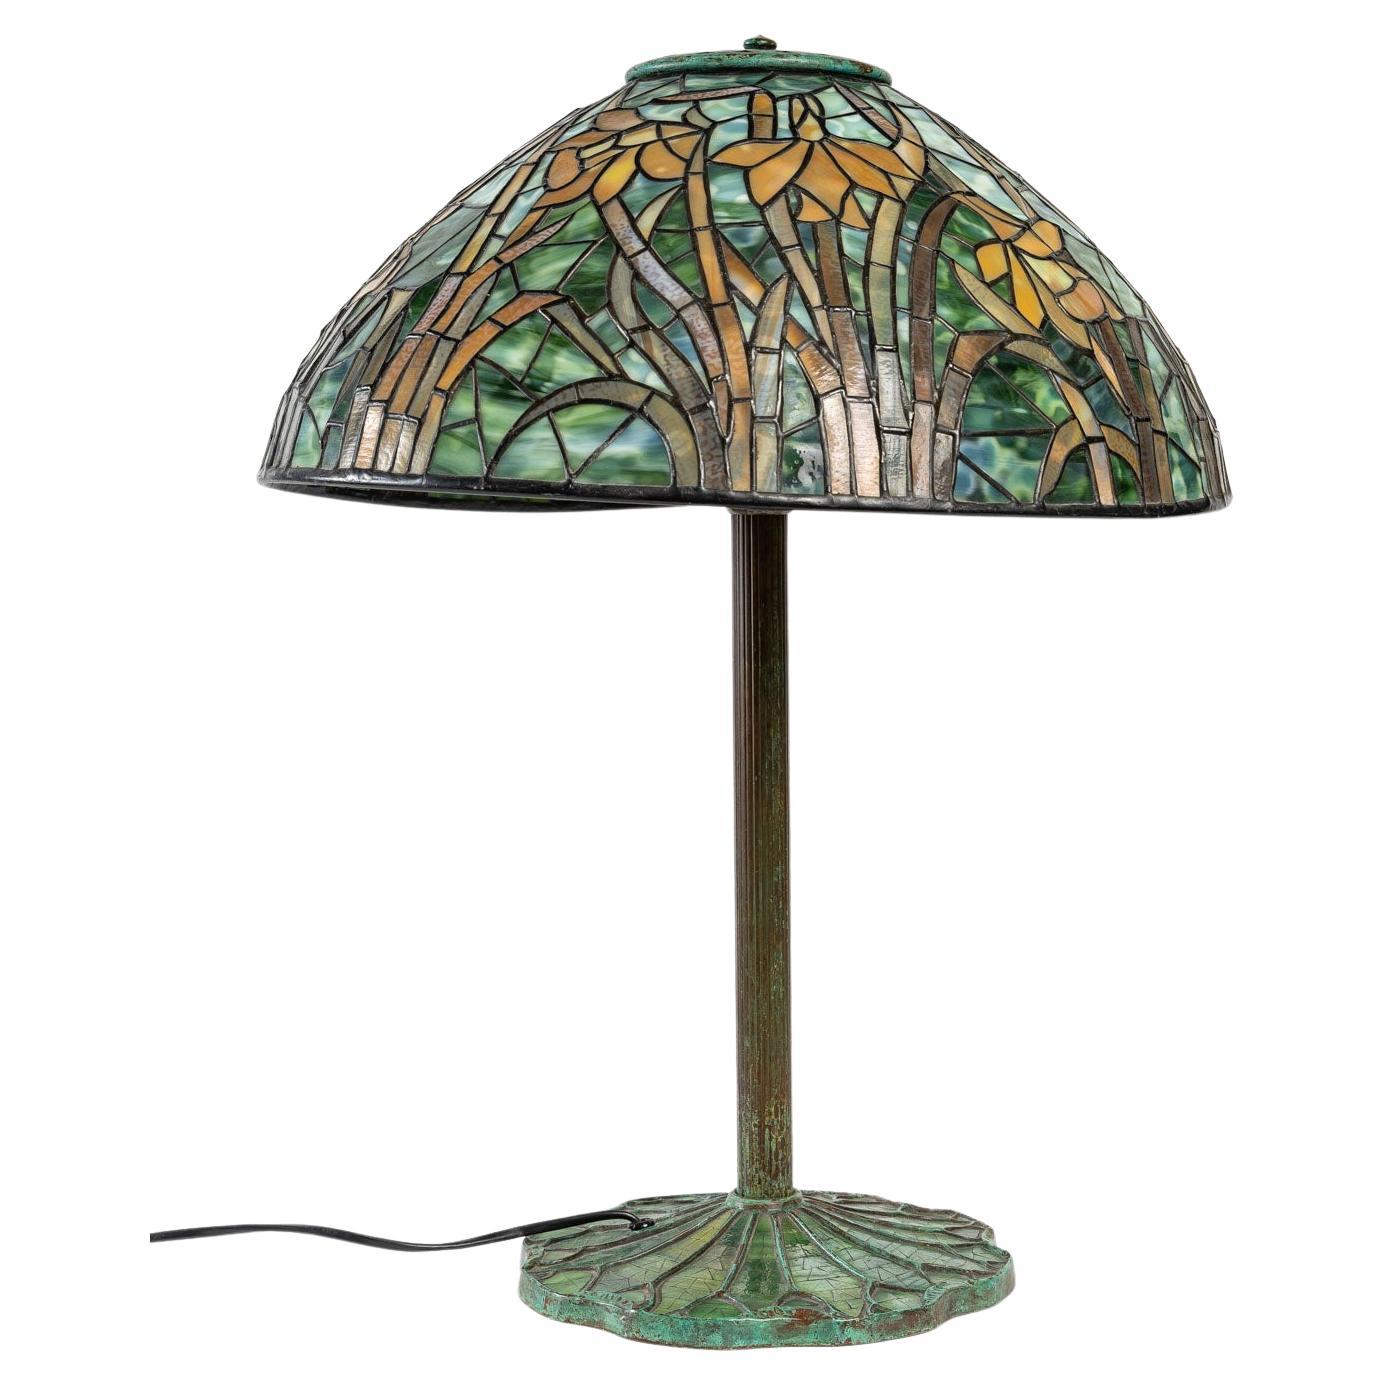 Lamp in the Tiffany taste, 20th century